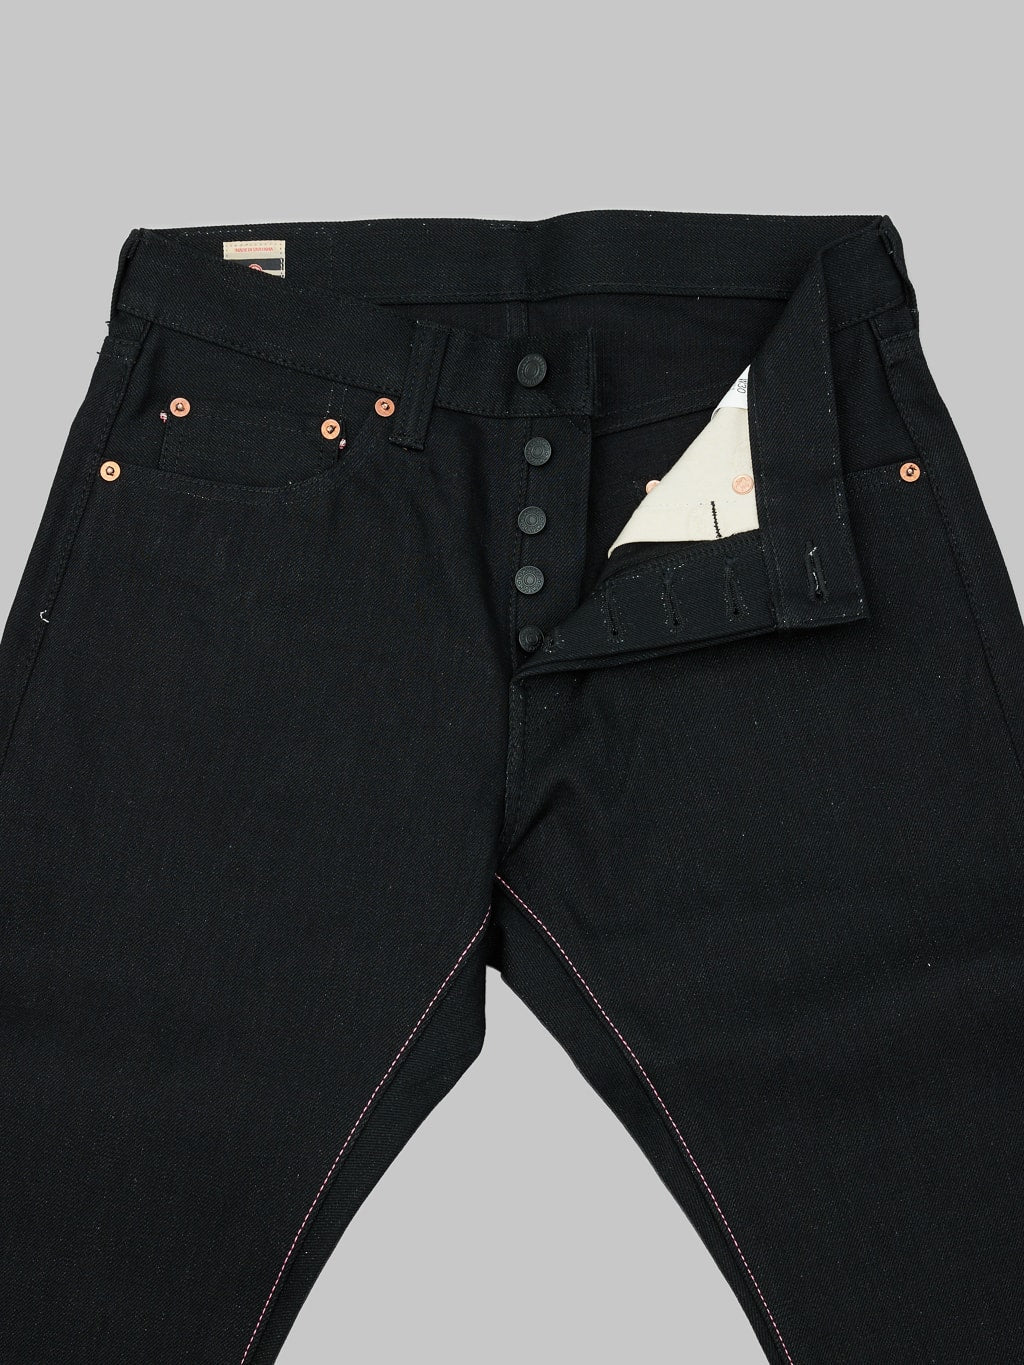 momotaro 0405b selvedge black denim high tapered jeans interior